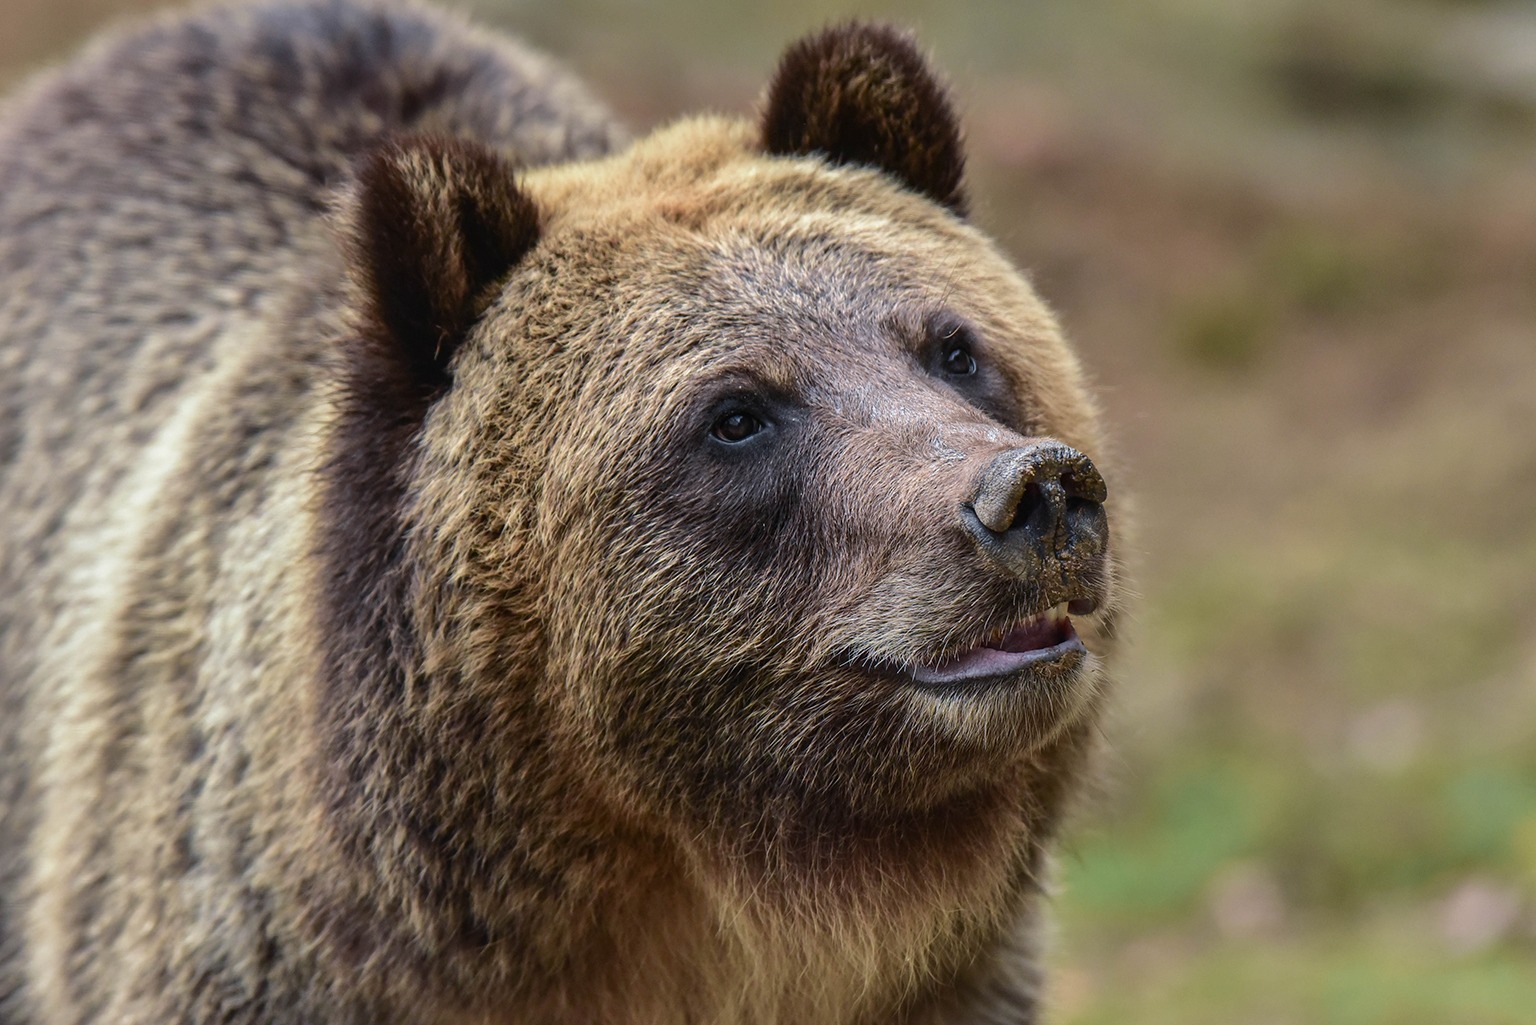 Jebbie the grizzly bear 'very happy' at wildlife sanctuary